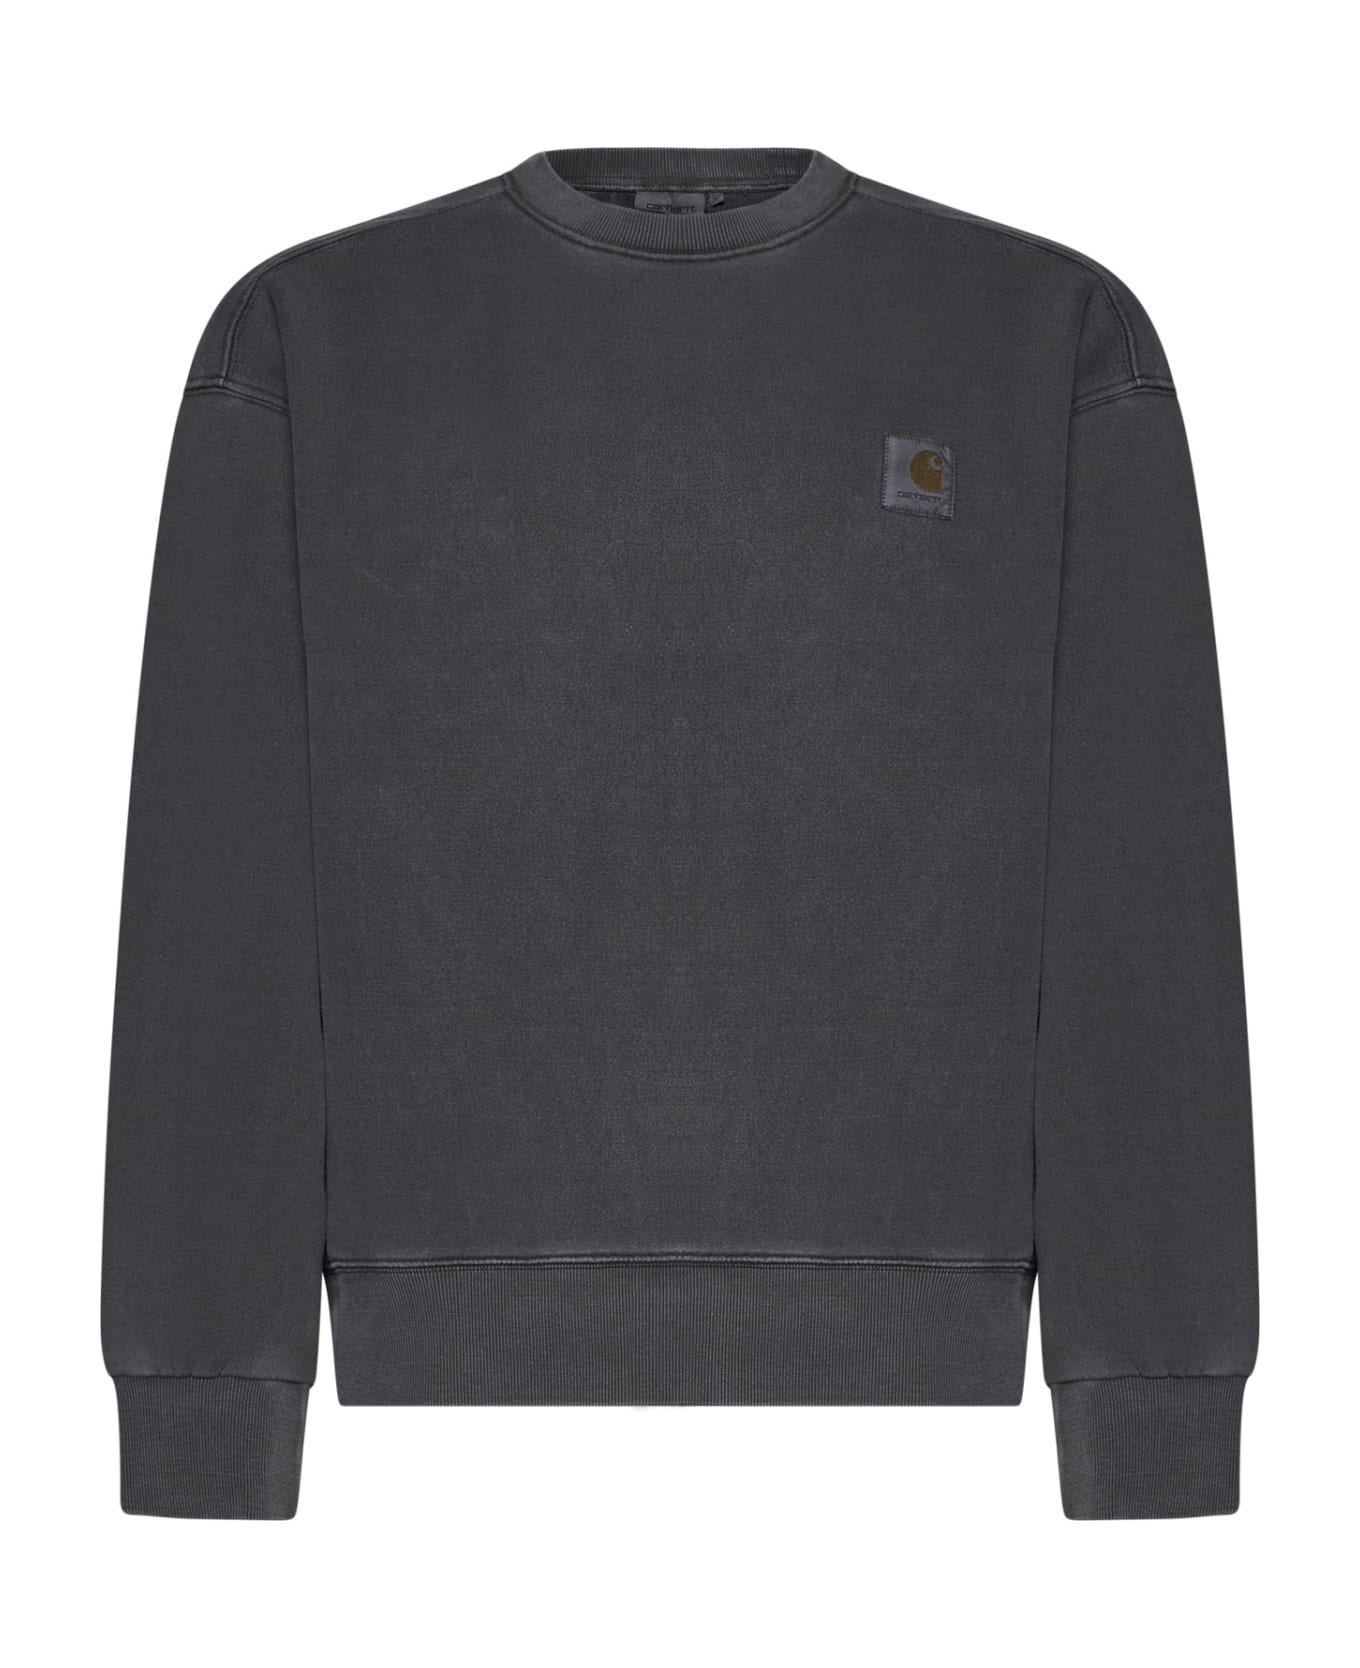 Carhartt Sweater - Charcoal garment dyed